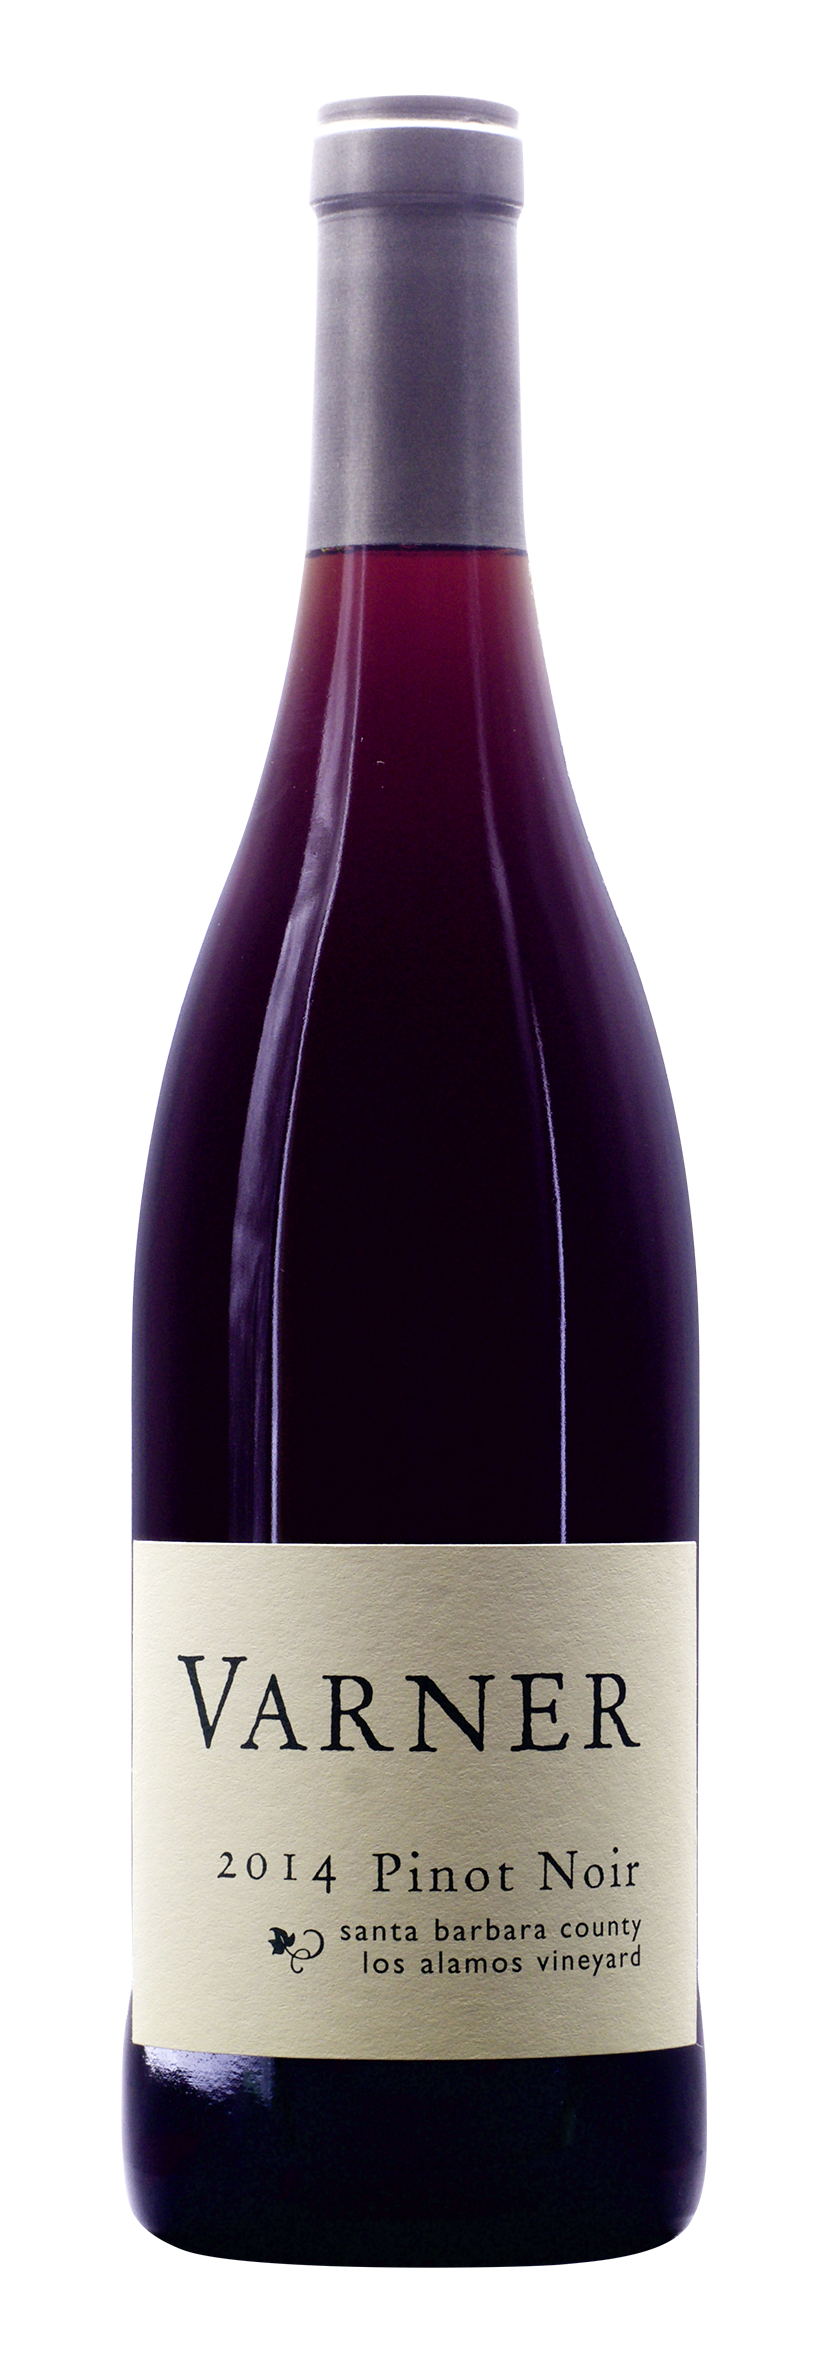 Los Alamos Vineyard Pinot Noir 2014